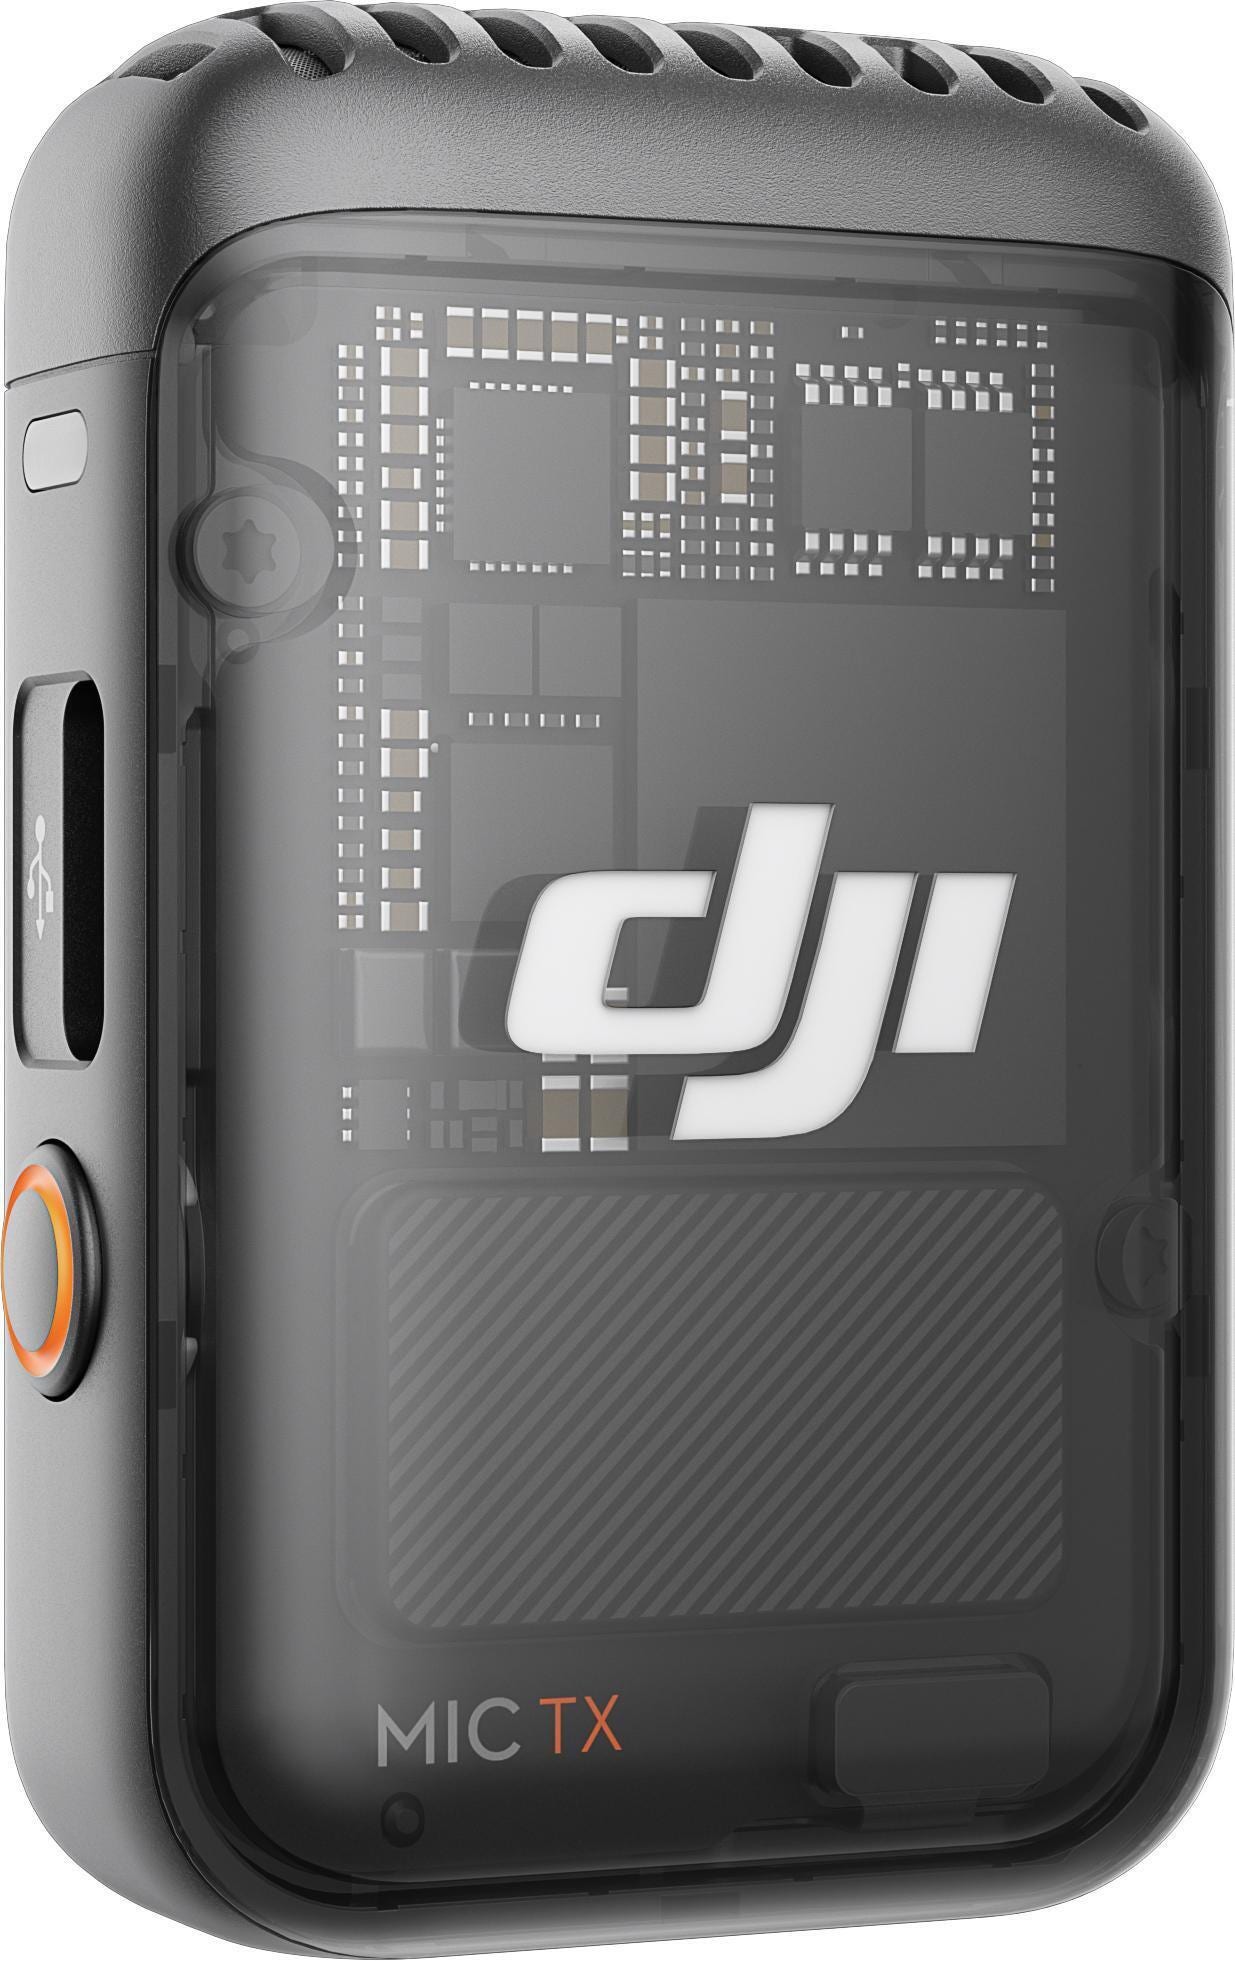 DJI Mic 2 Wireless Transmission System - Dual Transmitter